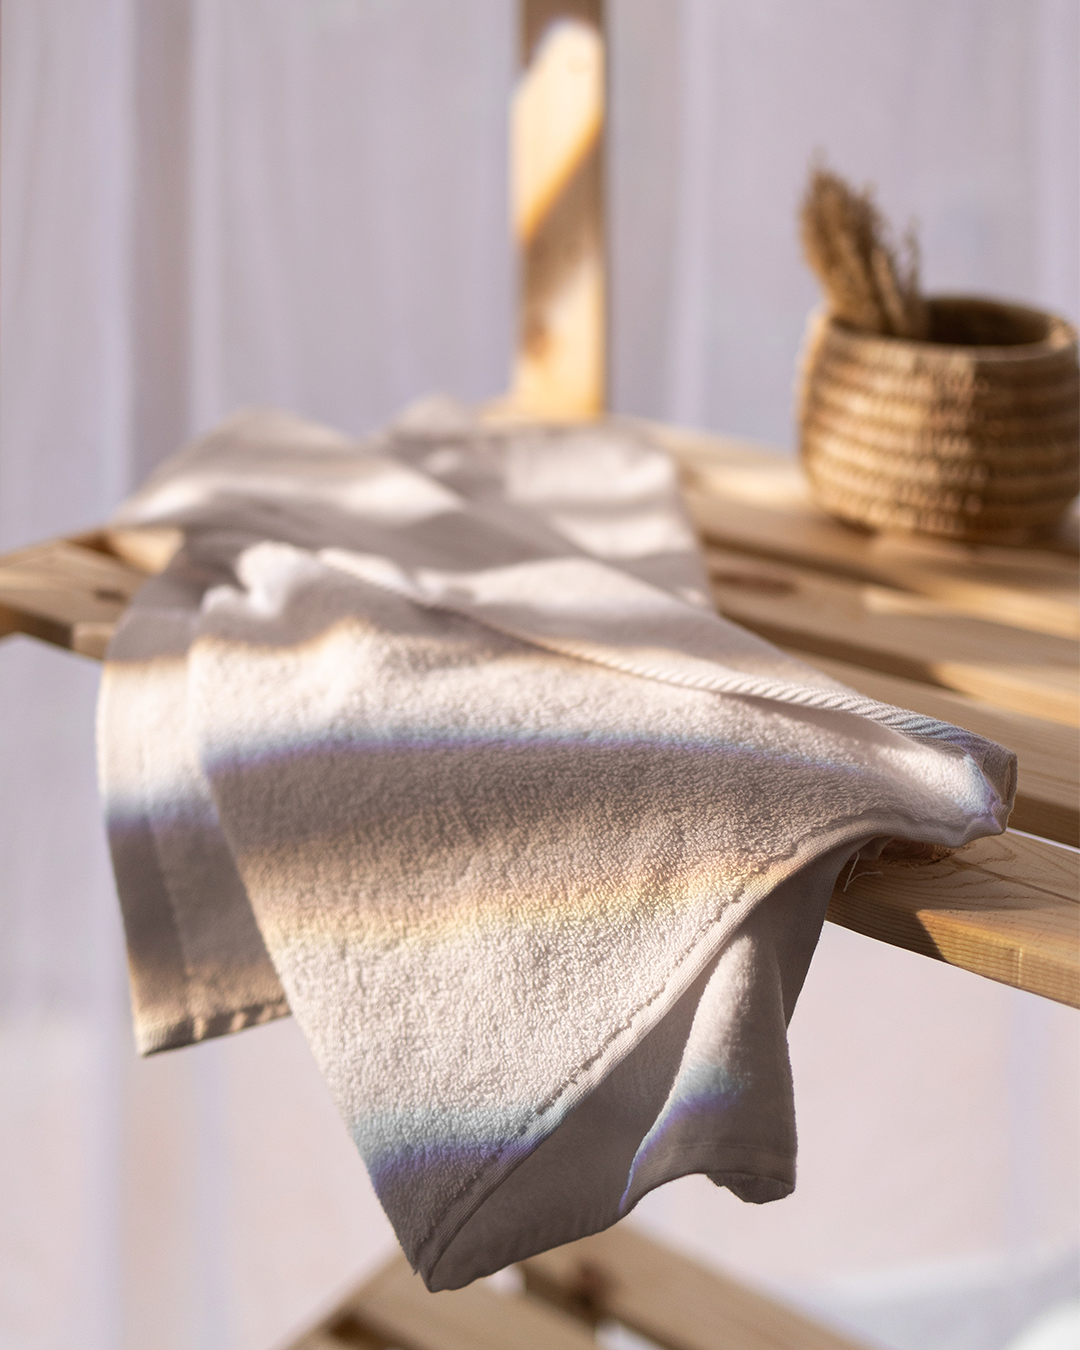 100% Egyptian Cotton Face Towel